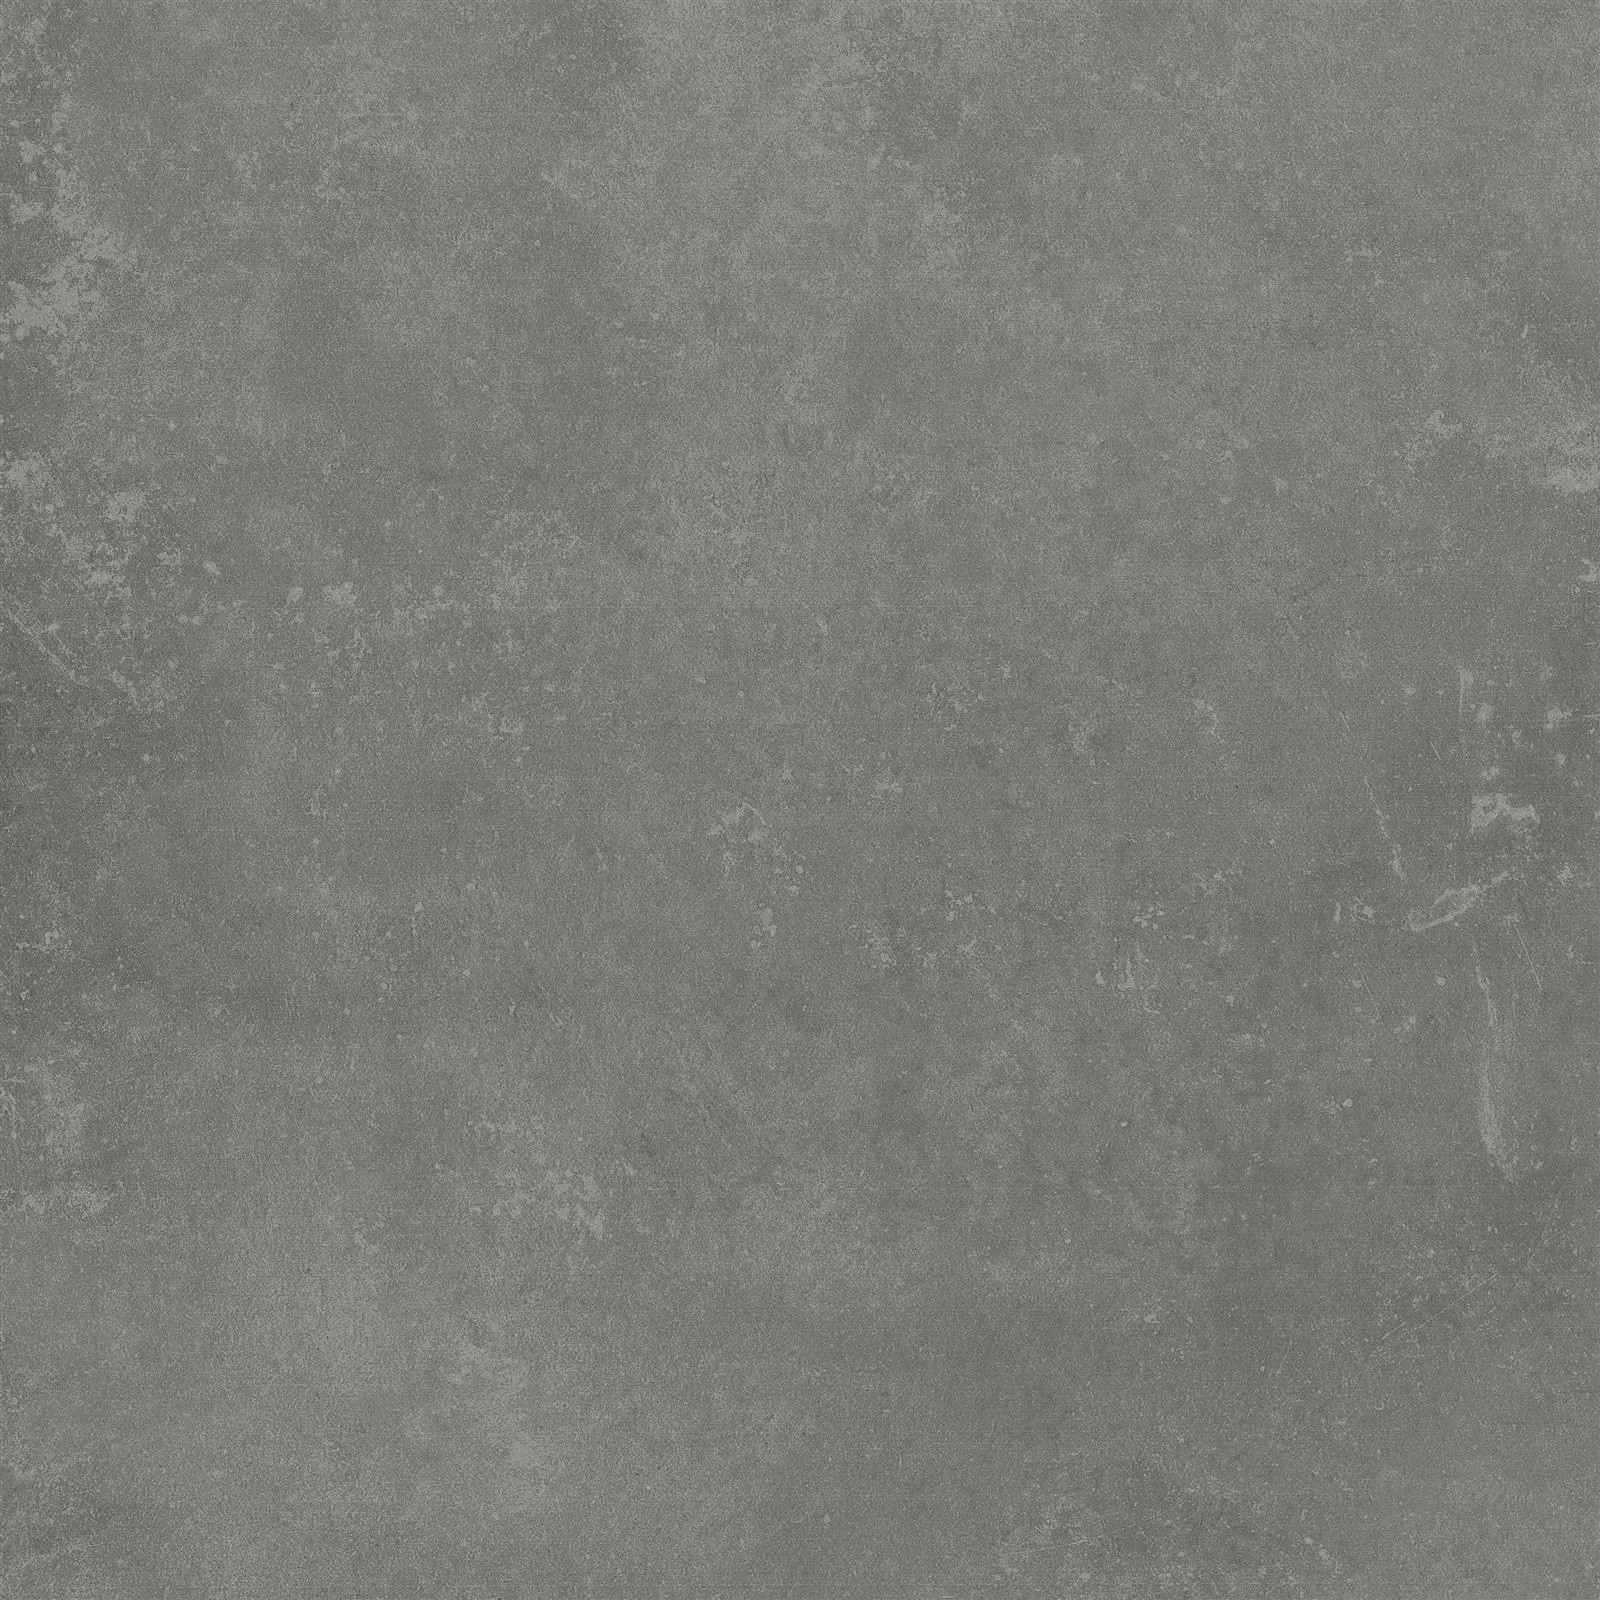 Podne Pločice Imitacija Cementa Nepal Slim Tamnosiva 60x60cm